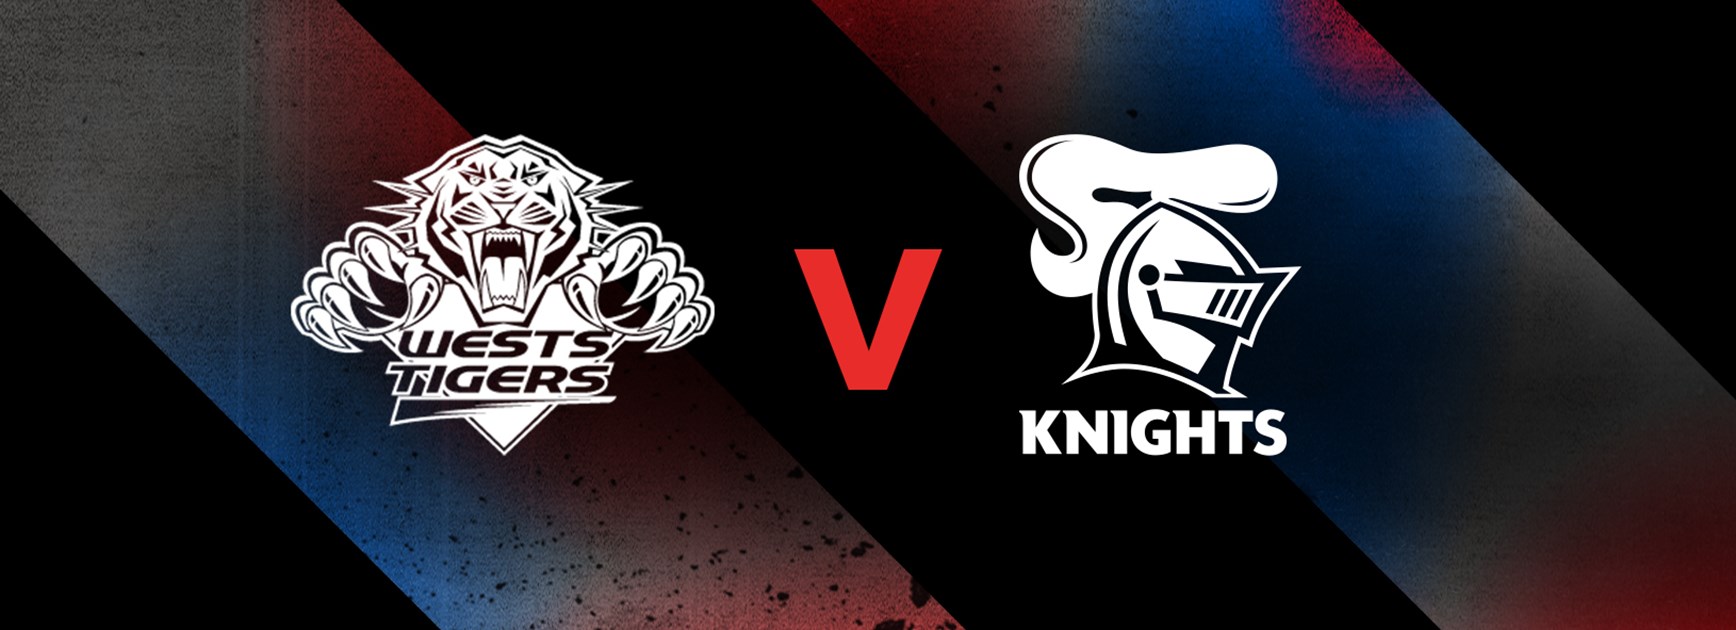 Knights v Tigers Round 2 NRL team list